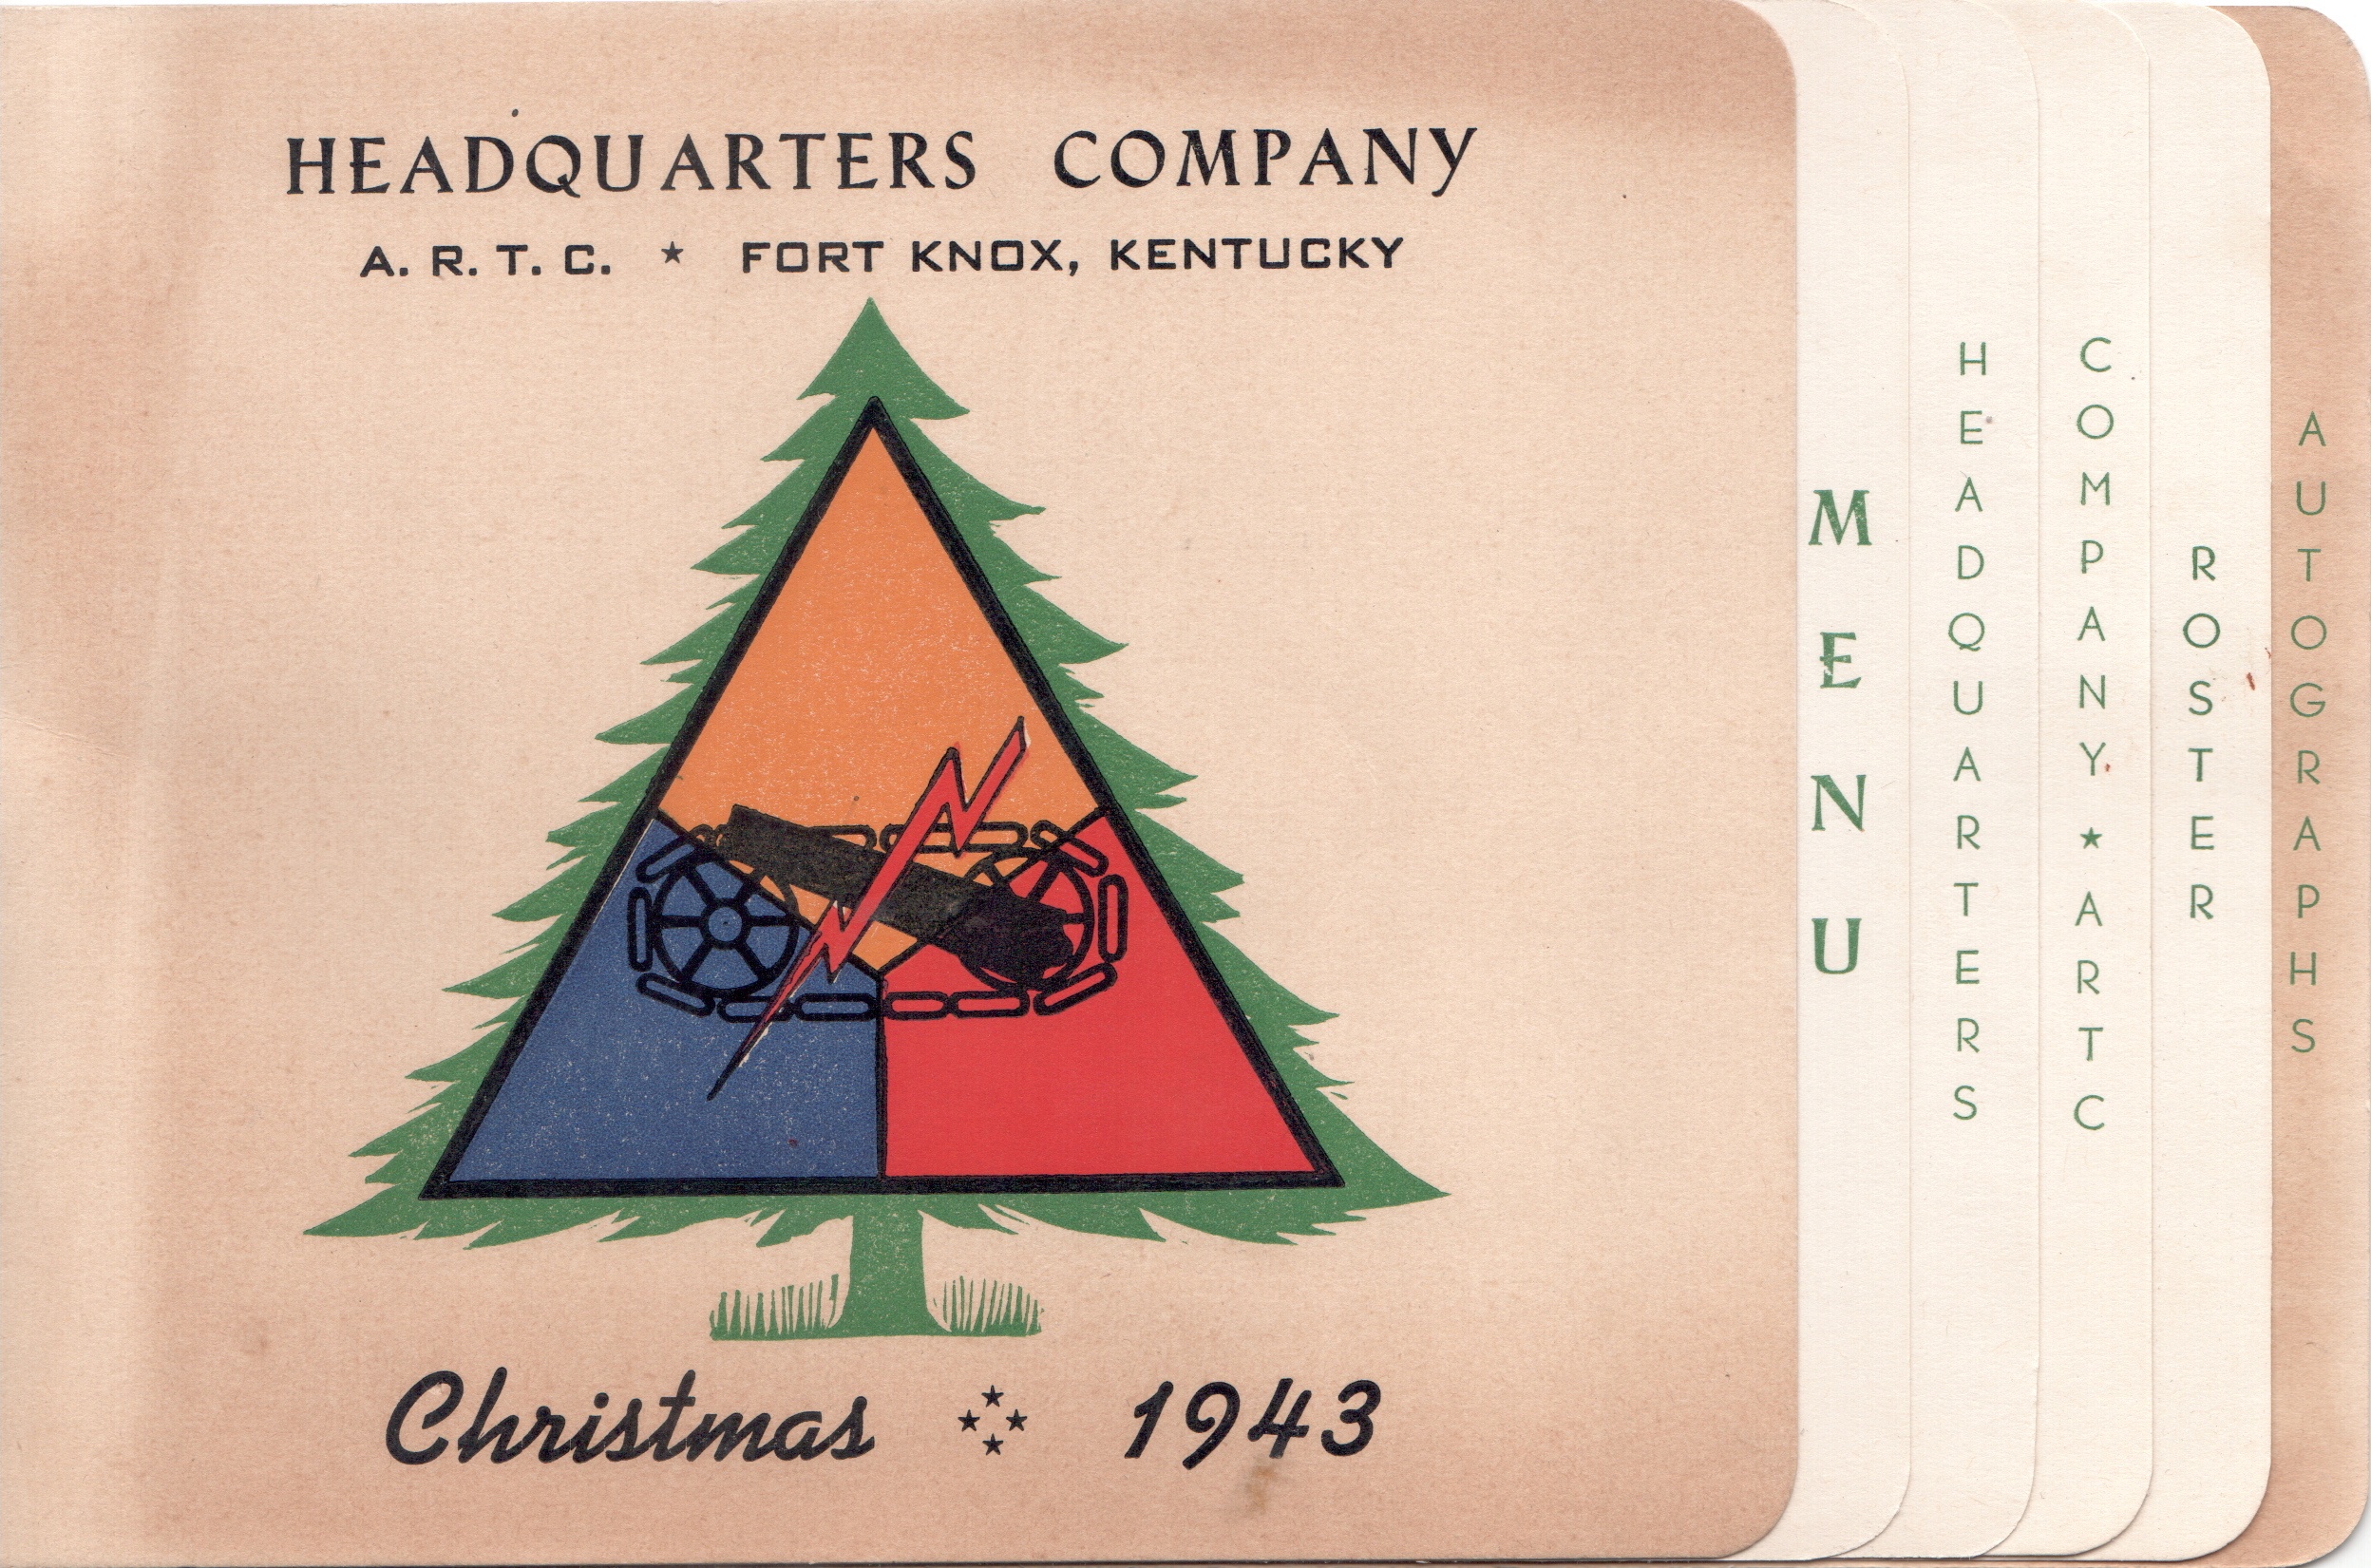 Armored Replacement Training Center Christmas dinner menu - Fort Knox, Kentucky - 1943